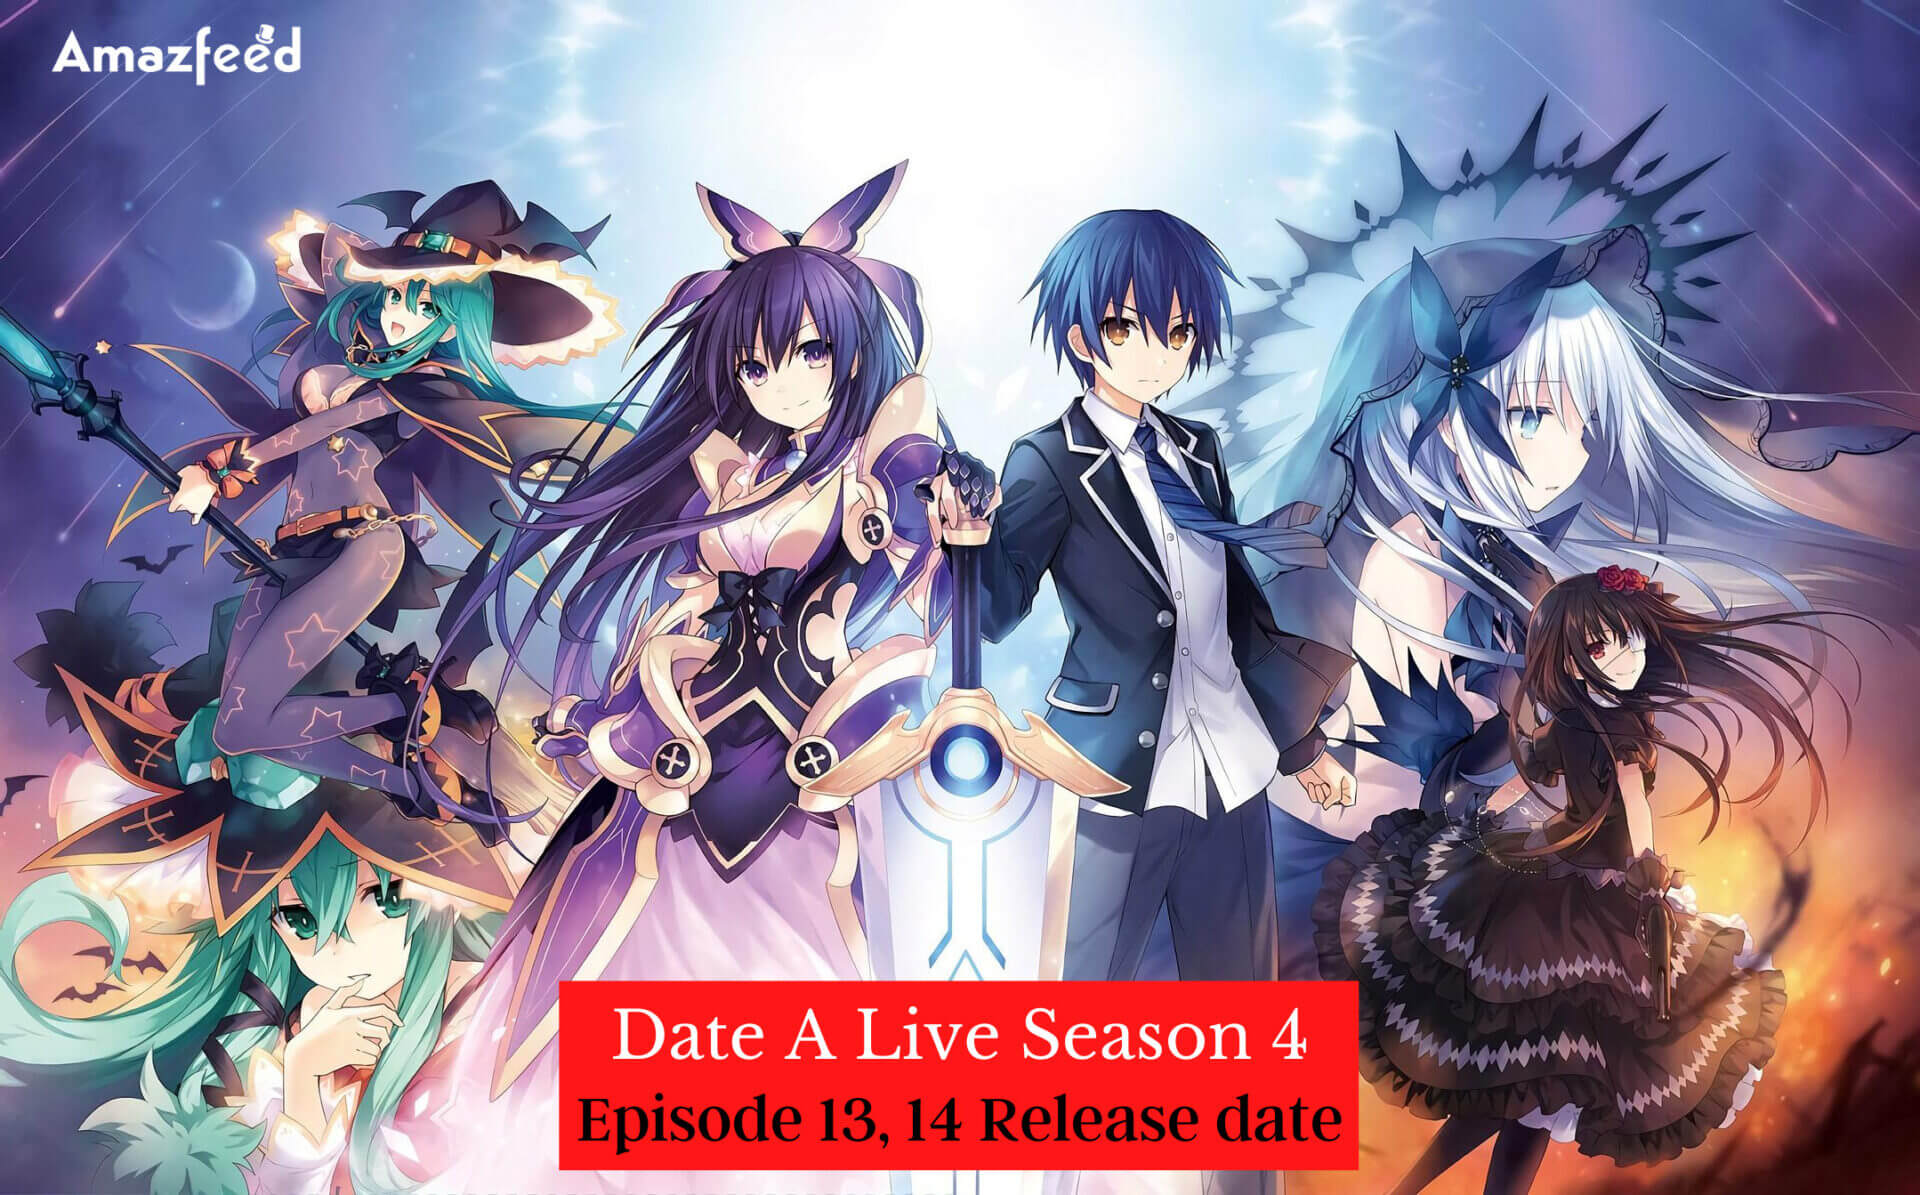 Date A Live Season 4 episode 13, 14 release date